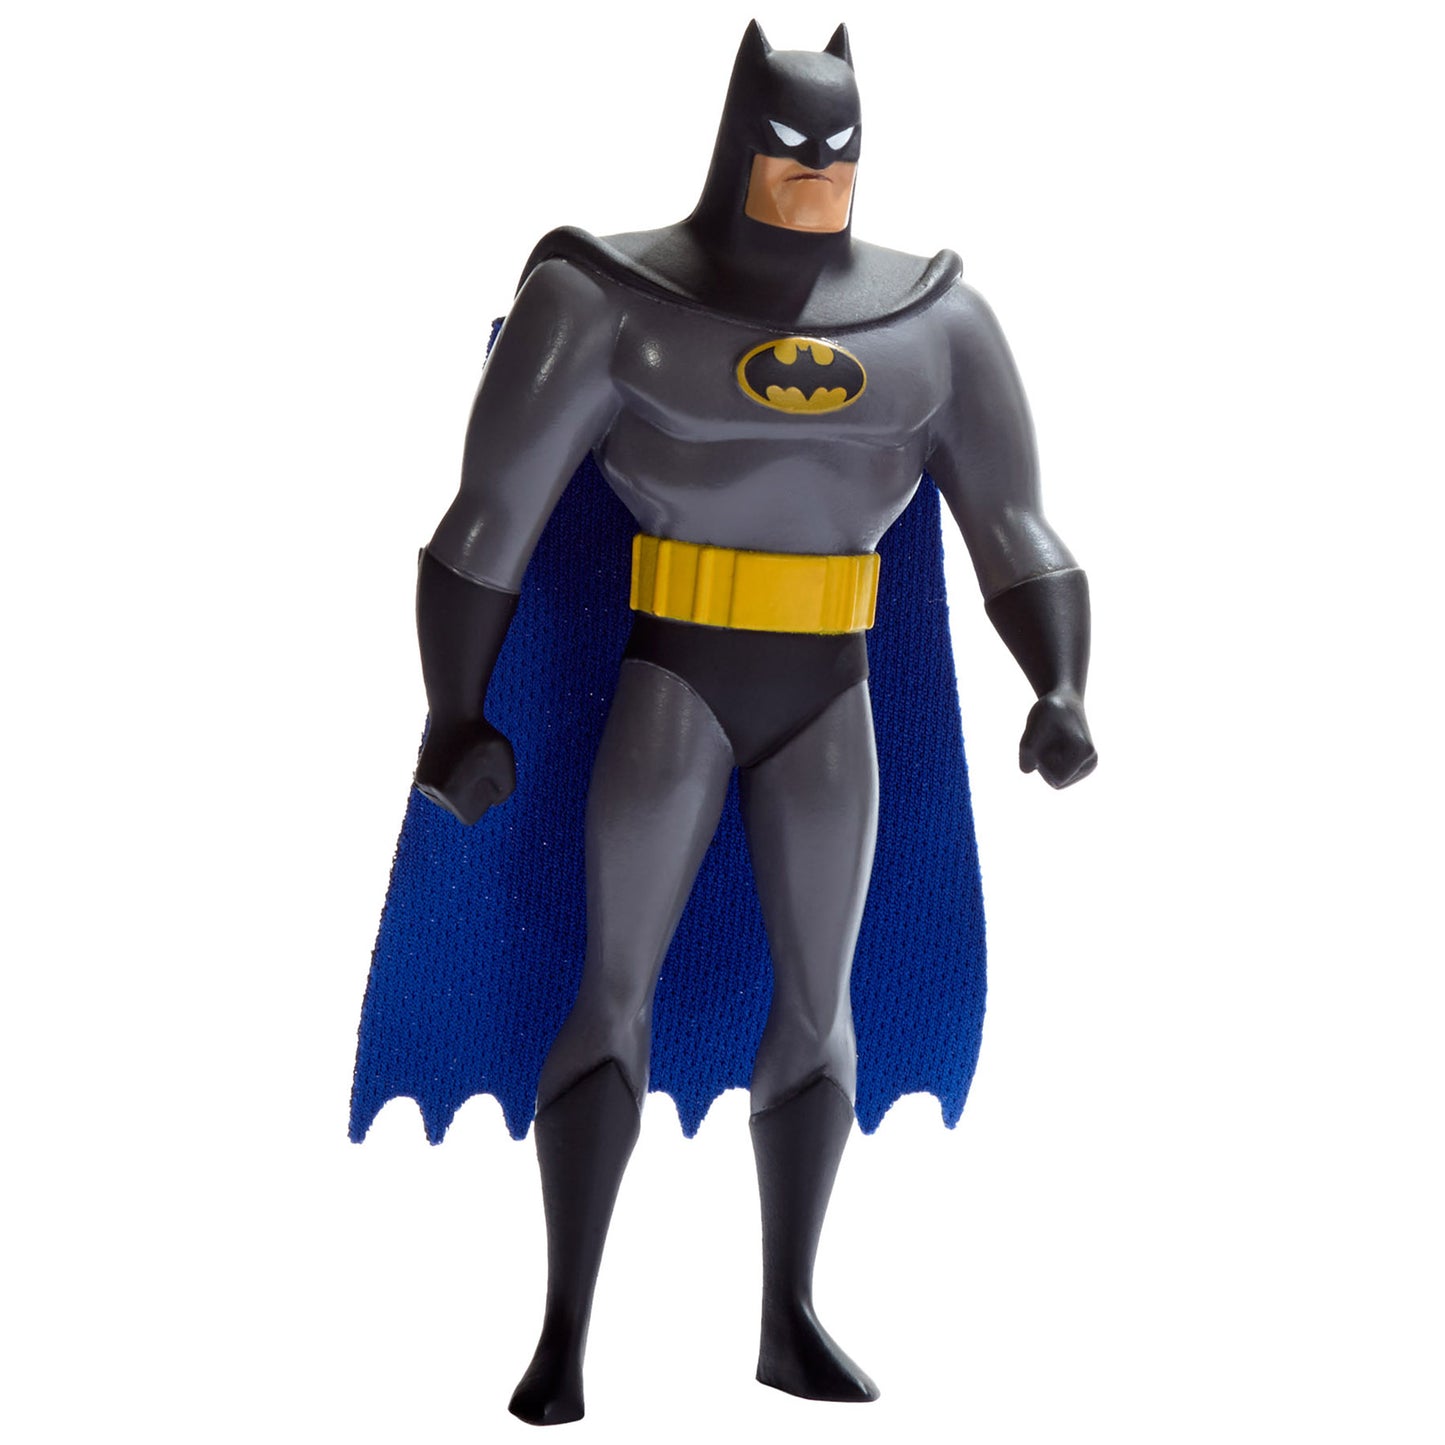 Batman from Batman The Animated Series bendable figure